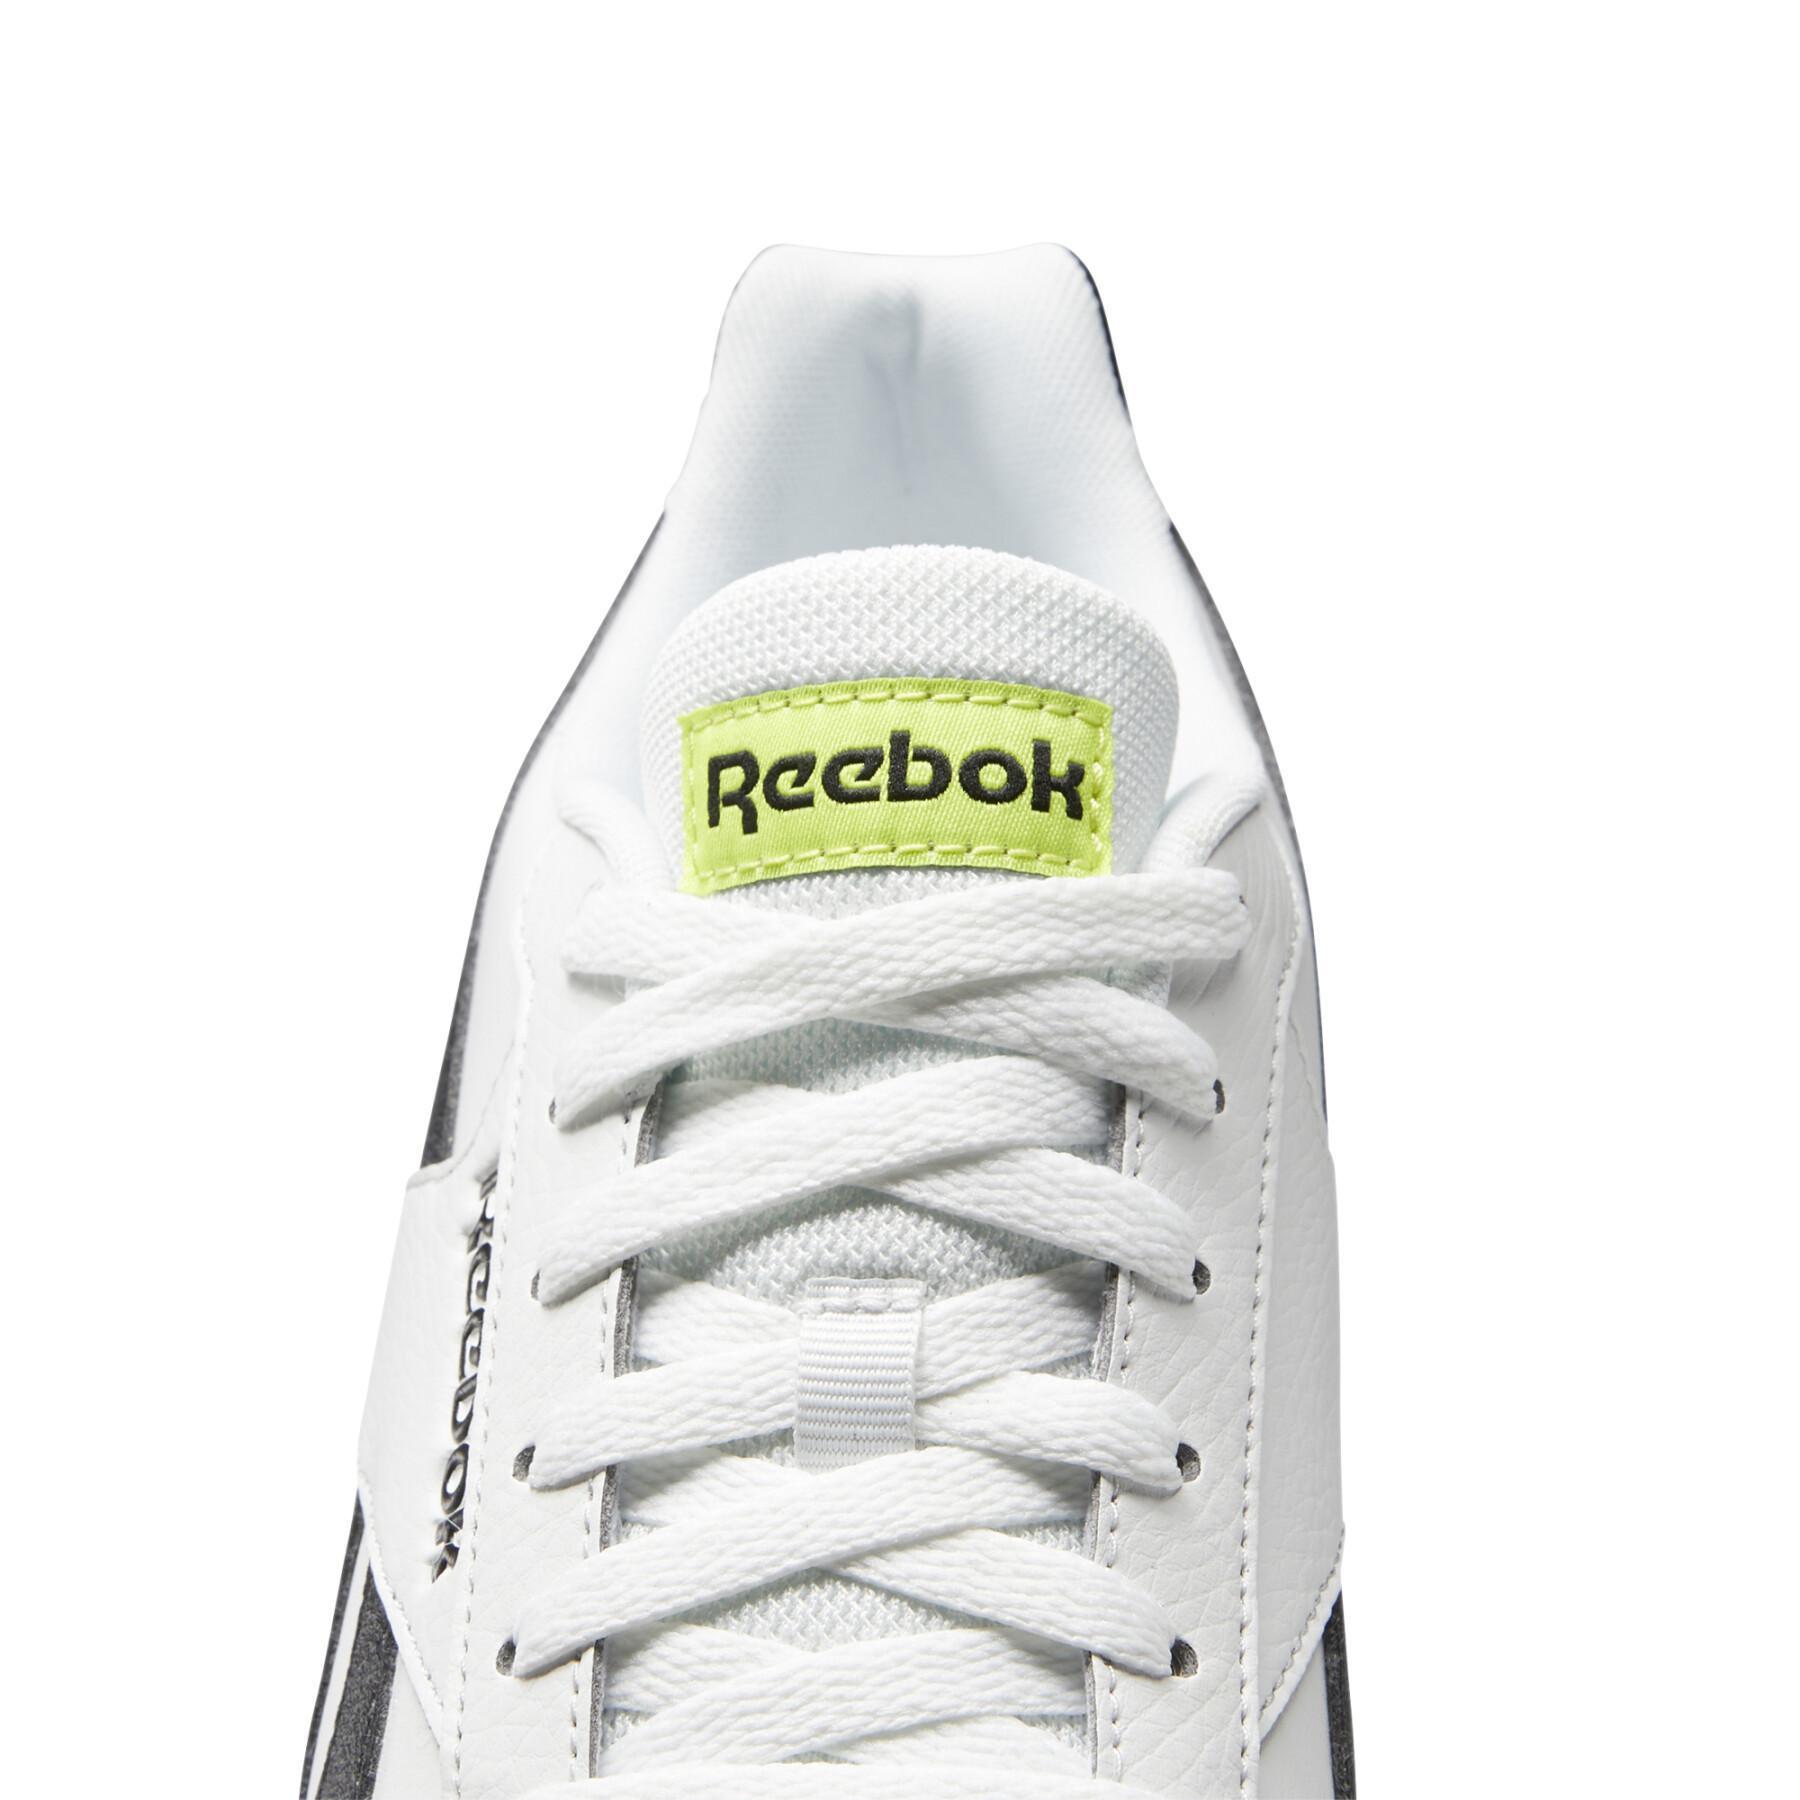 Schuhe Reebok Royal Glide Ripple Clip